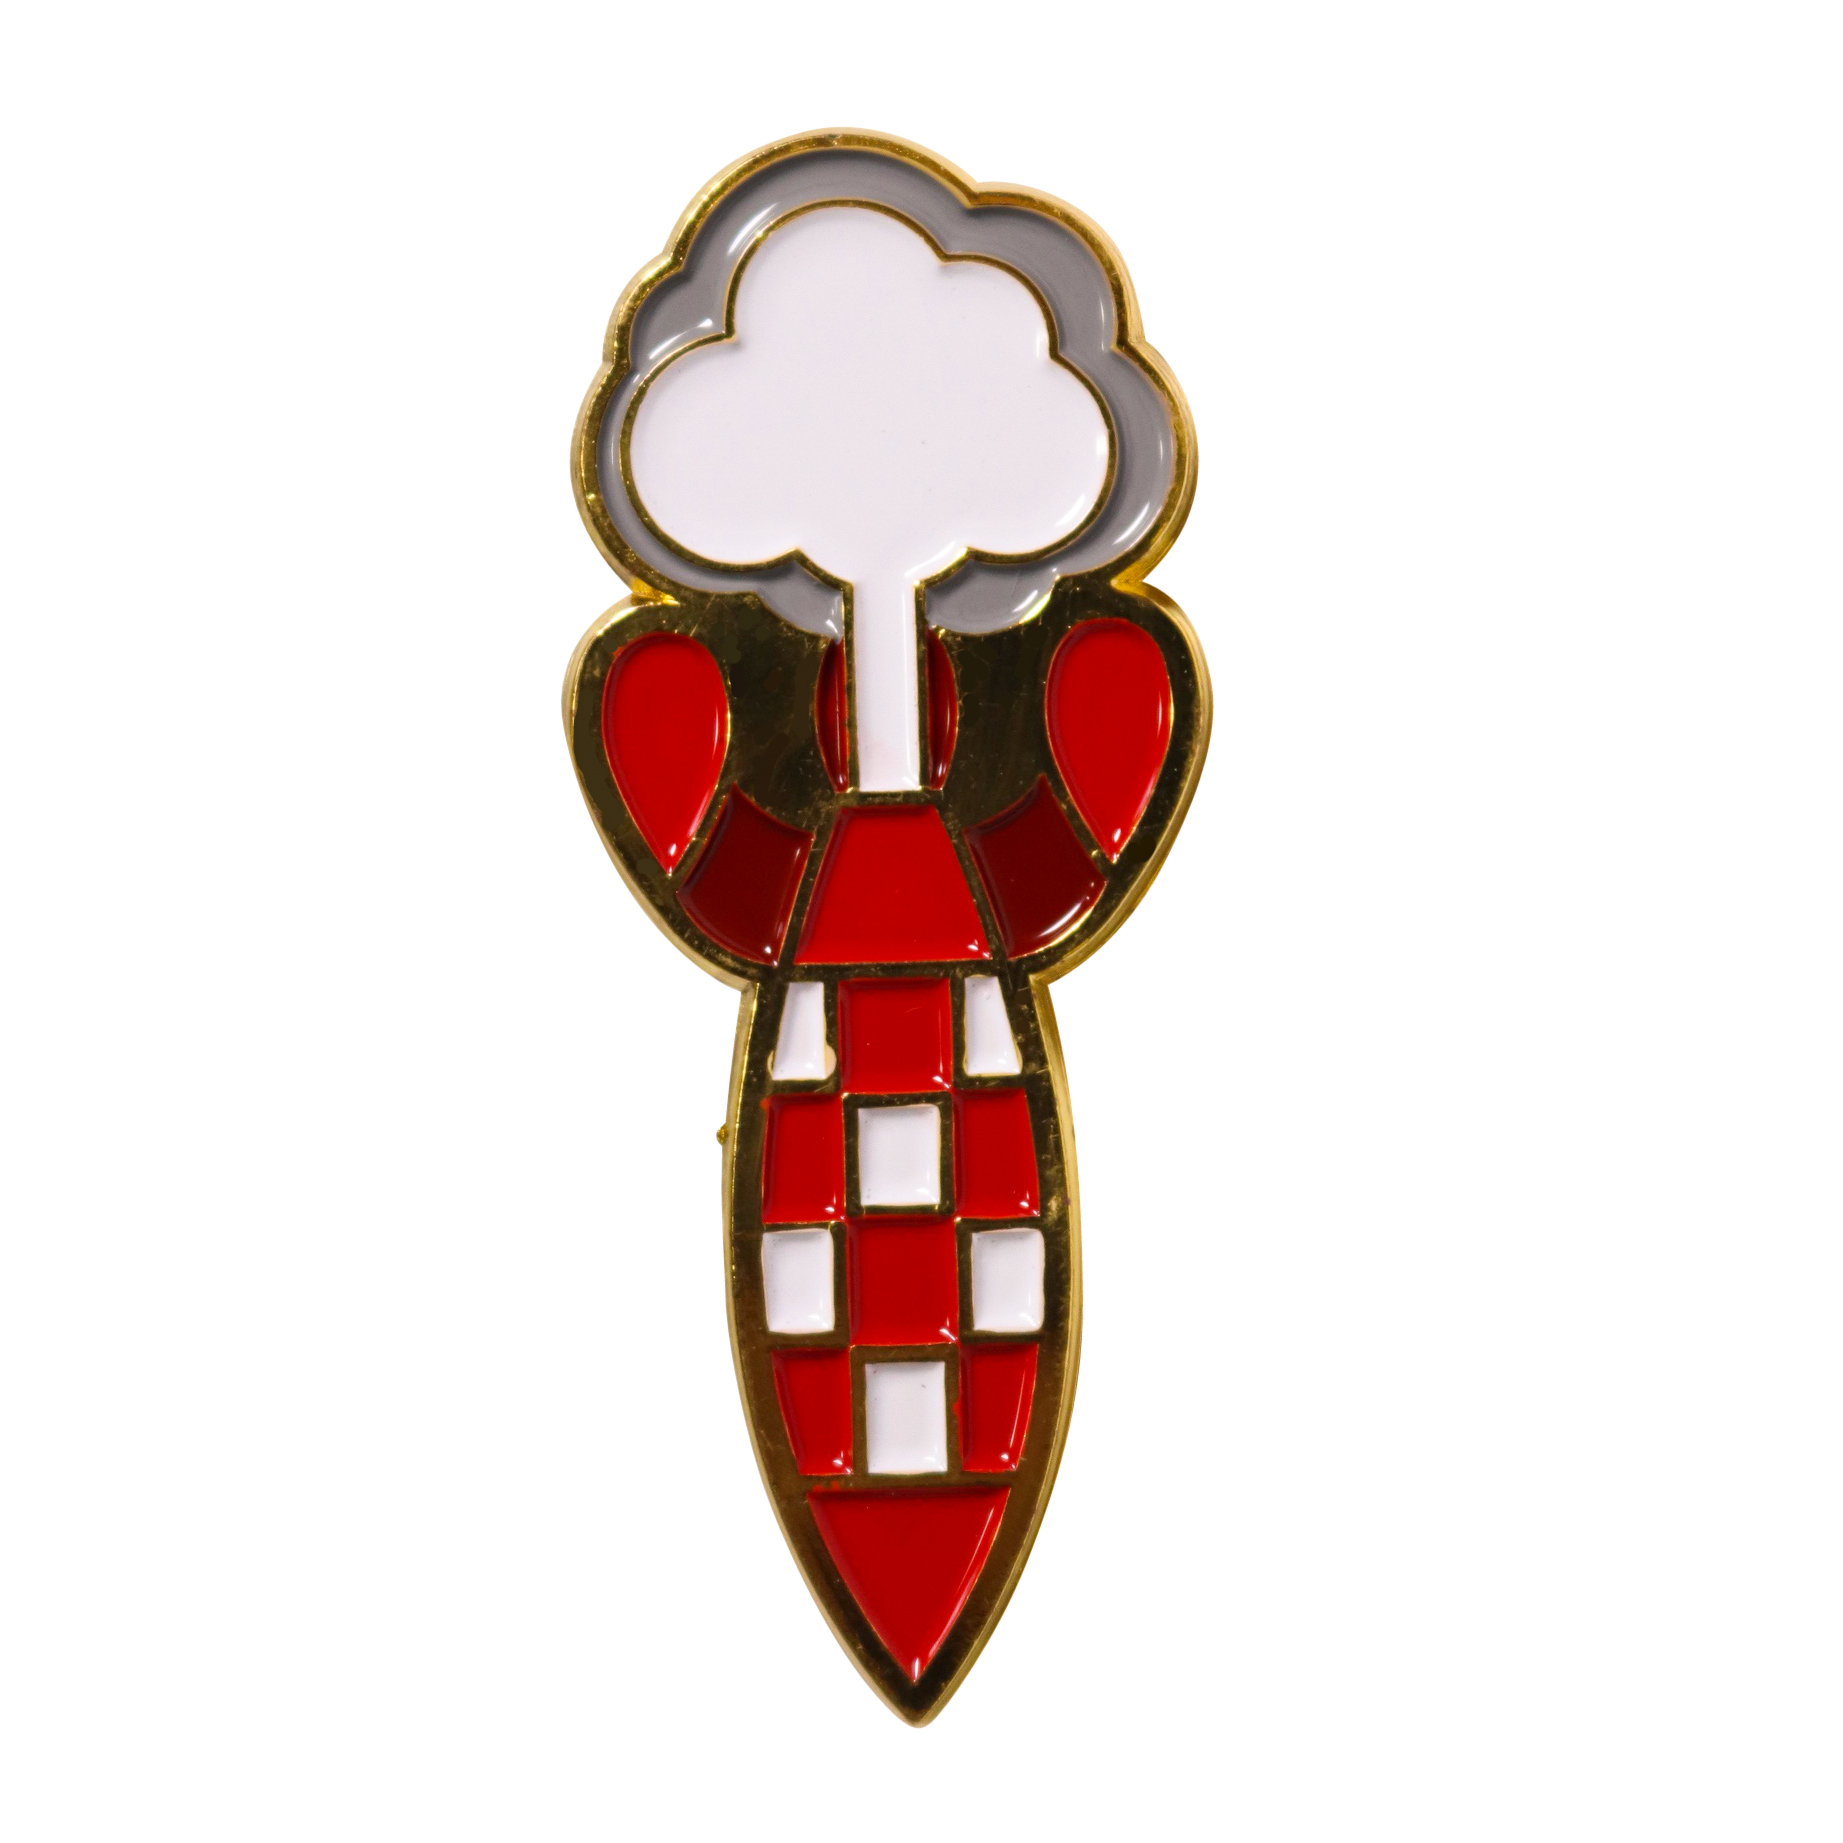 15 - Custom designer metal-craft lapel pins manufactured with hard enamel personality pins